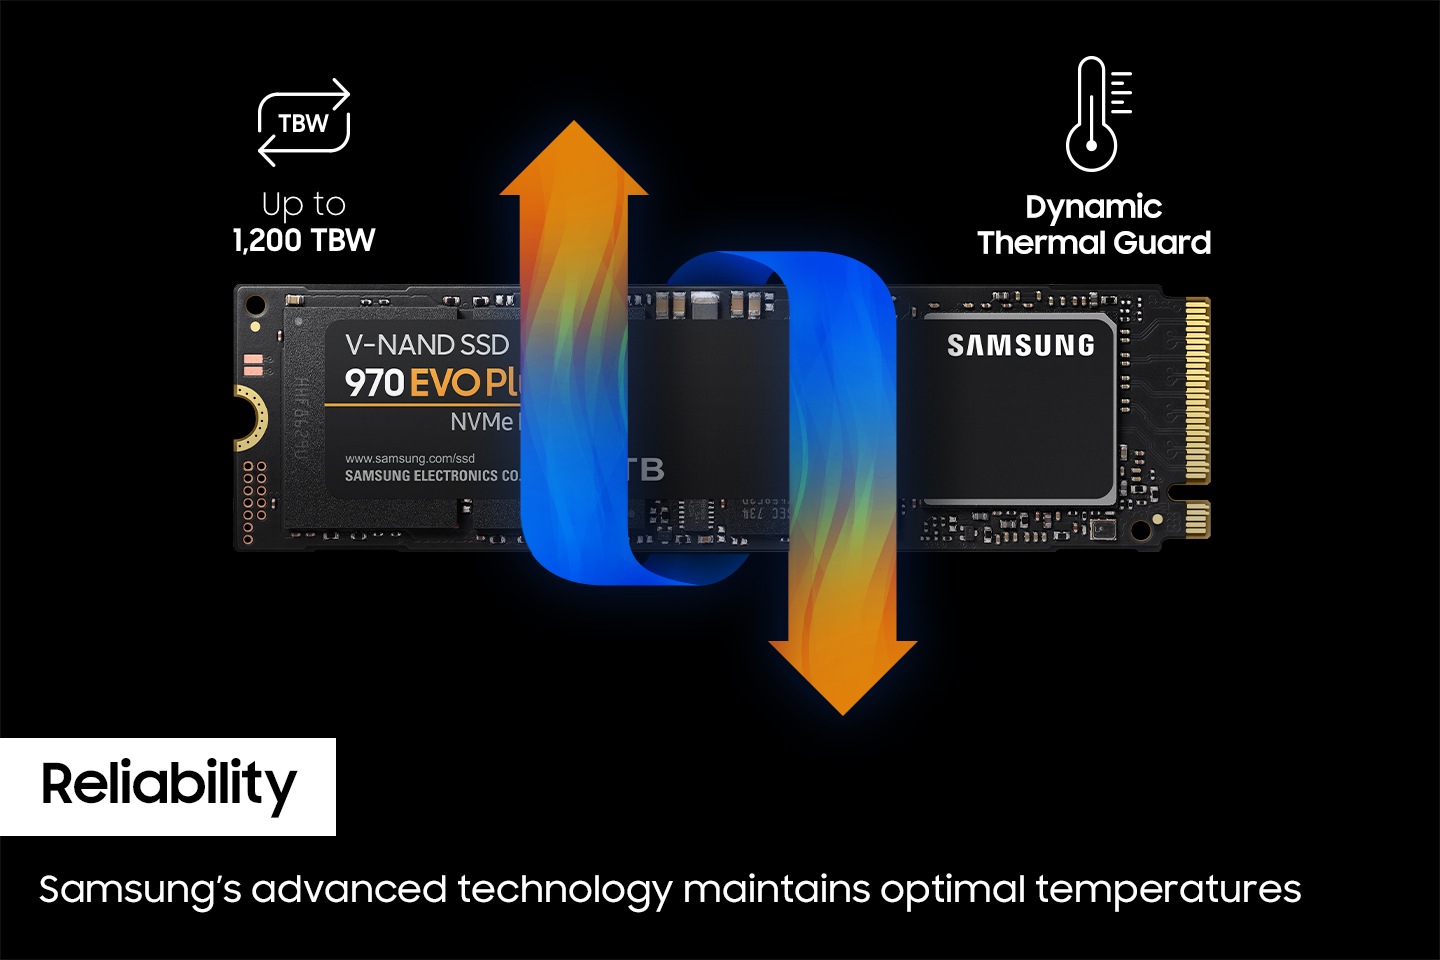 SSD 970 EVO Plus 2 TB 메모리 카드에 회오리처럼 화살표가 감겨있는 이미지가 보입니다. 화살표 양끝은 주황색, 제품을 휘감고 있는 부분은 파란색으로 과열 방지를 낮춰준다는 의미가 내포되어 있습니다.